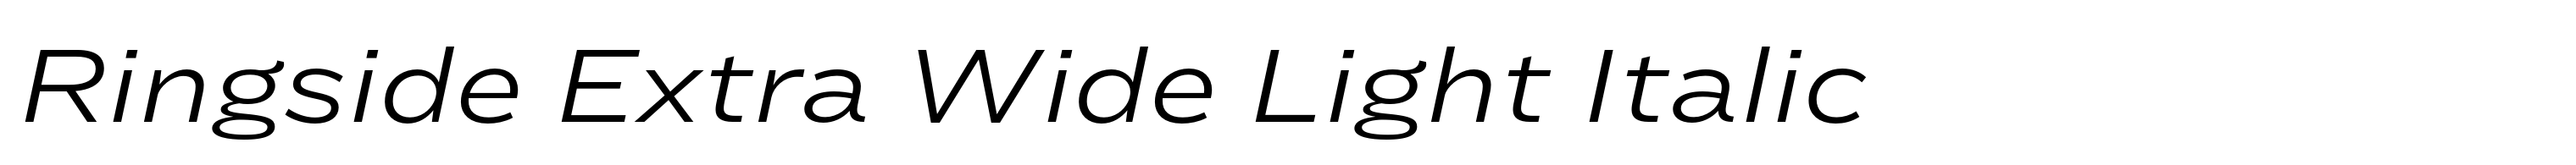 Ringside Extra Wide Light Italic